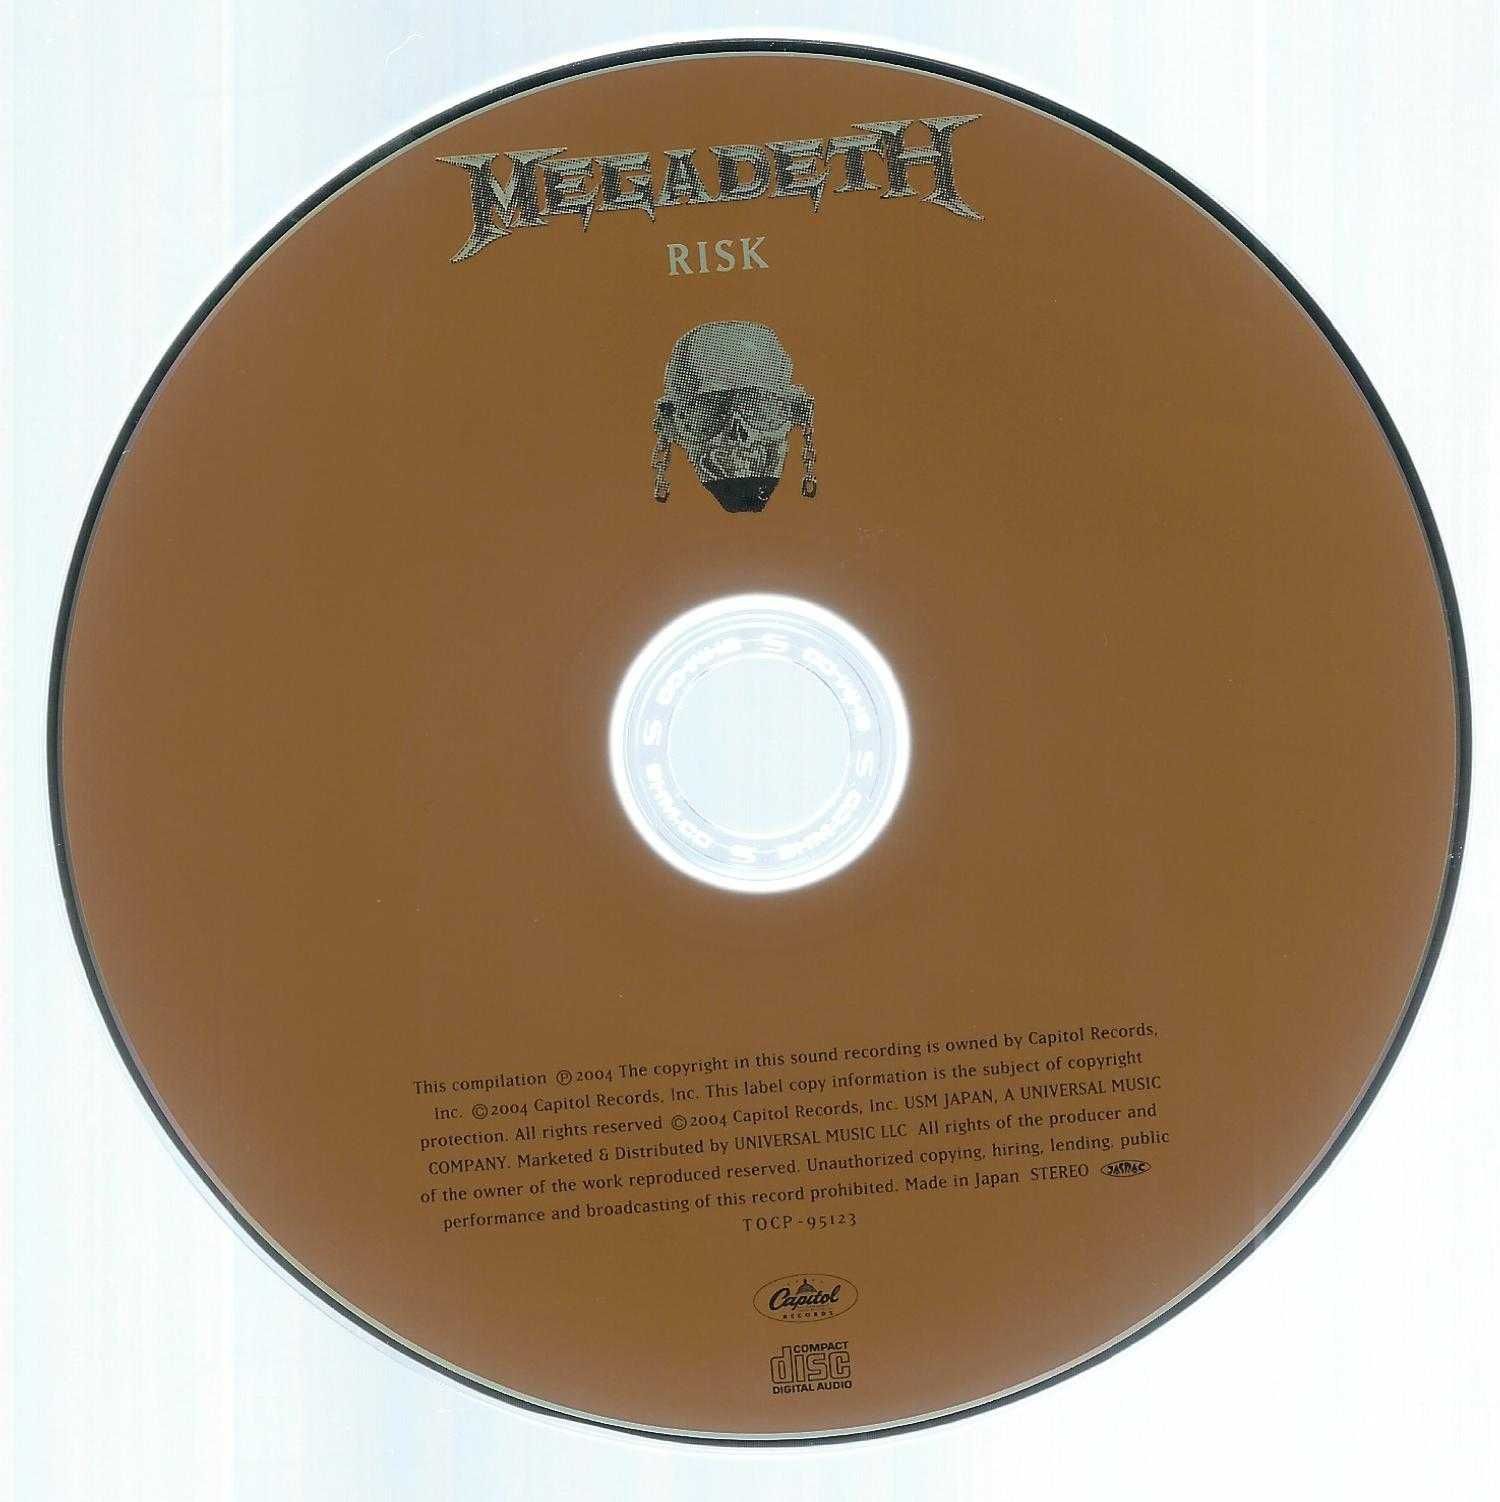 CD Megadeth – Risk (2013 Japan) (SHM-CD) (Capitol Records)